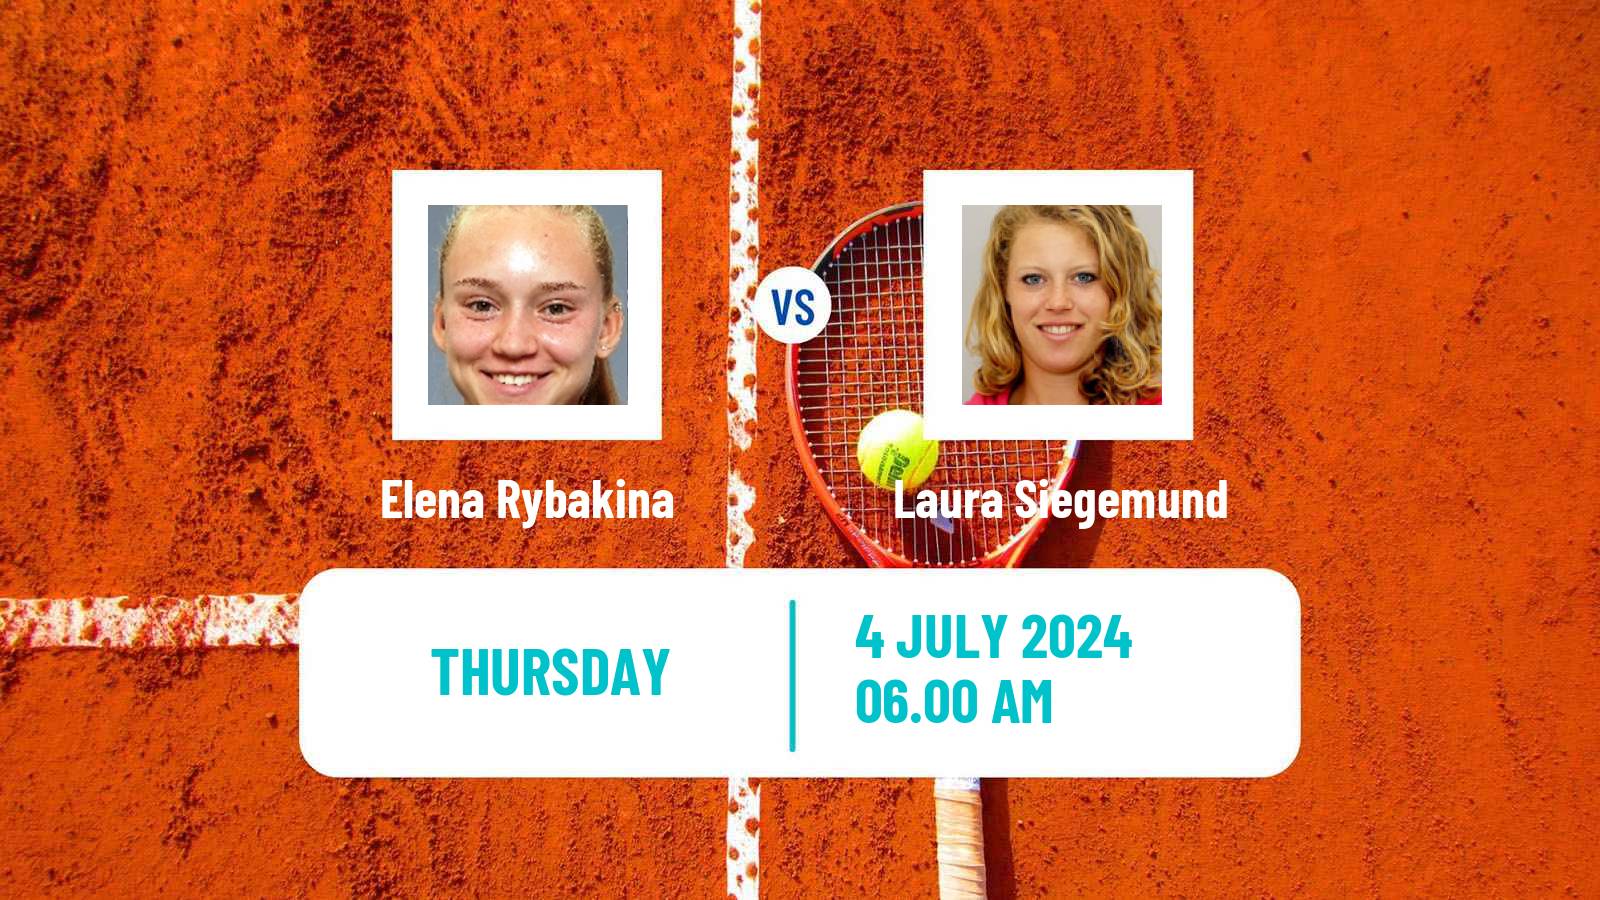 Tennis WTA Wimbledon Elena Rybakina - Laura Siegemund